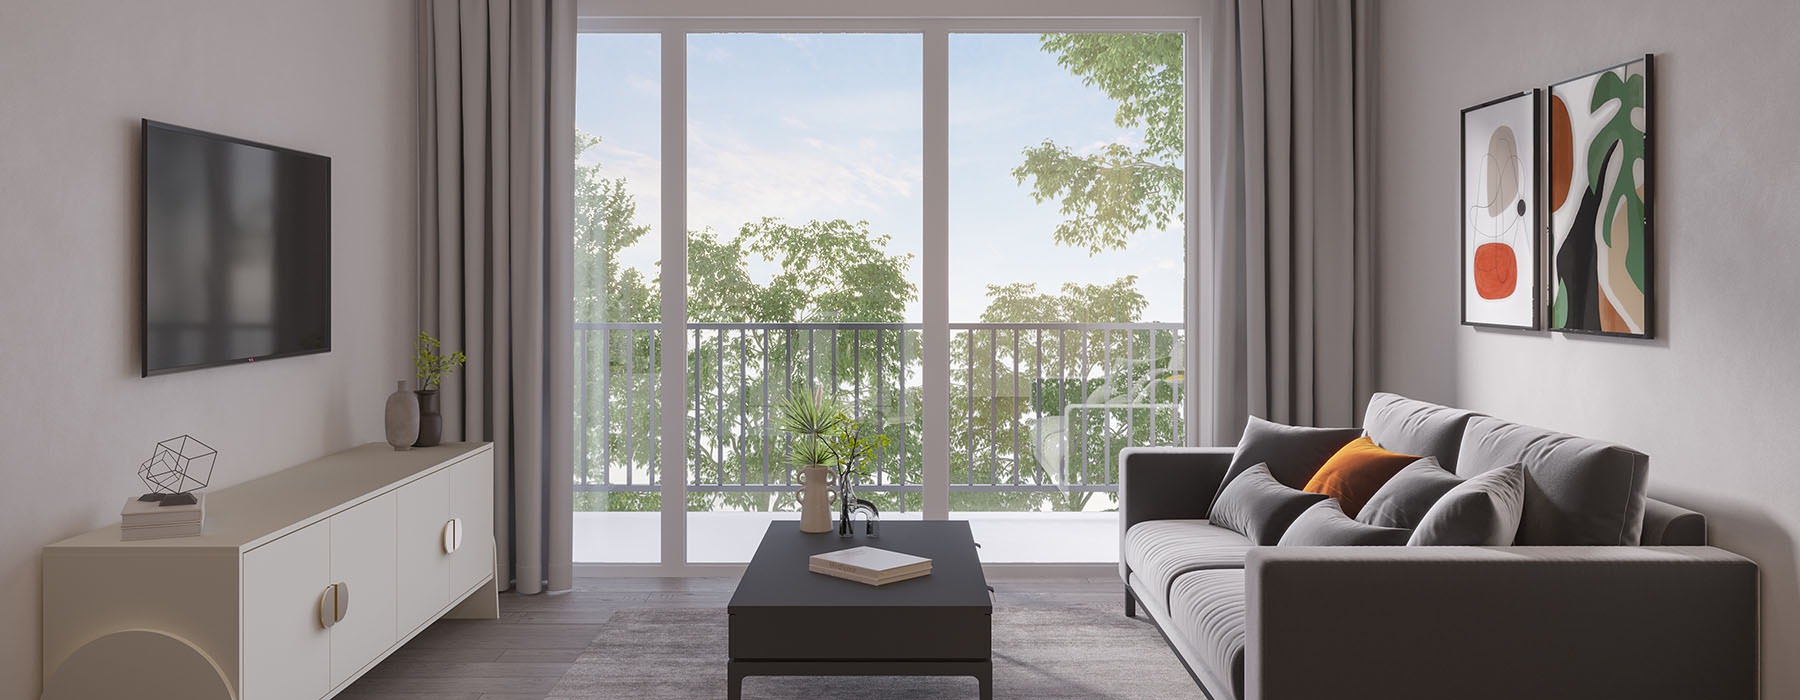 floor-to-ceiling windows brighten spacious living room